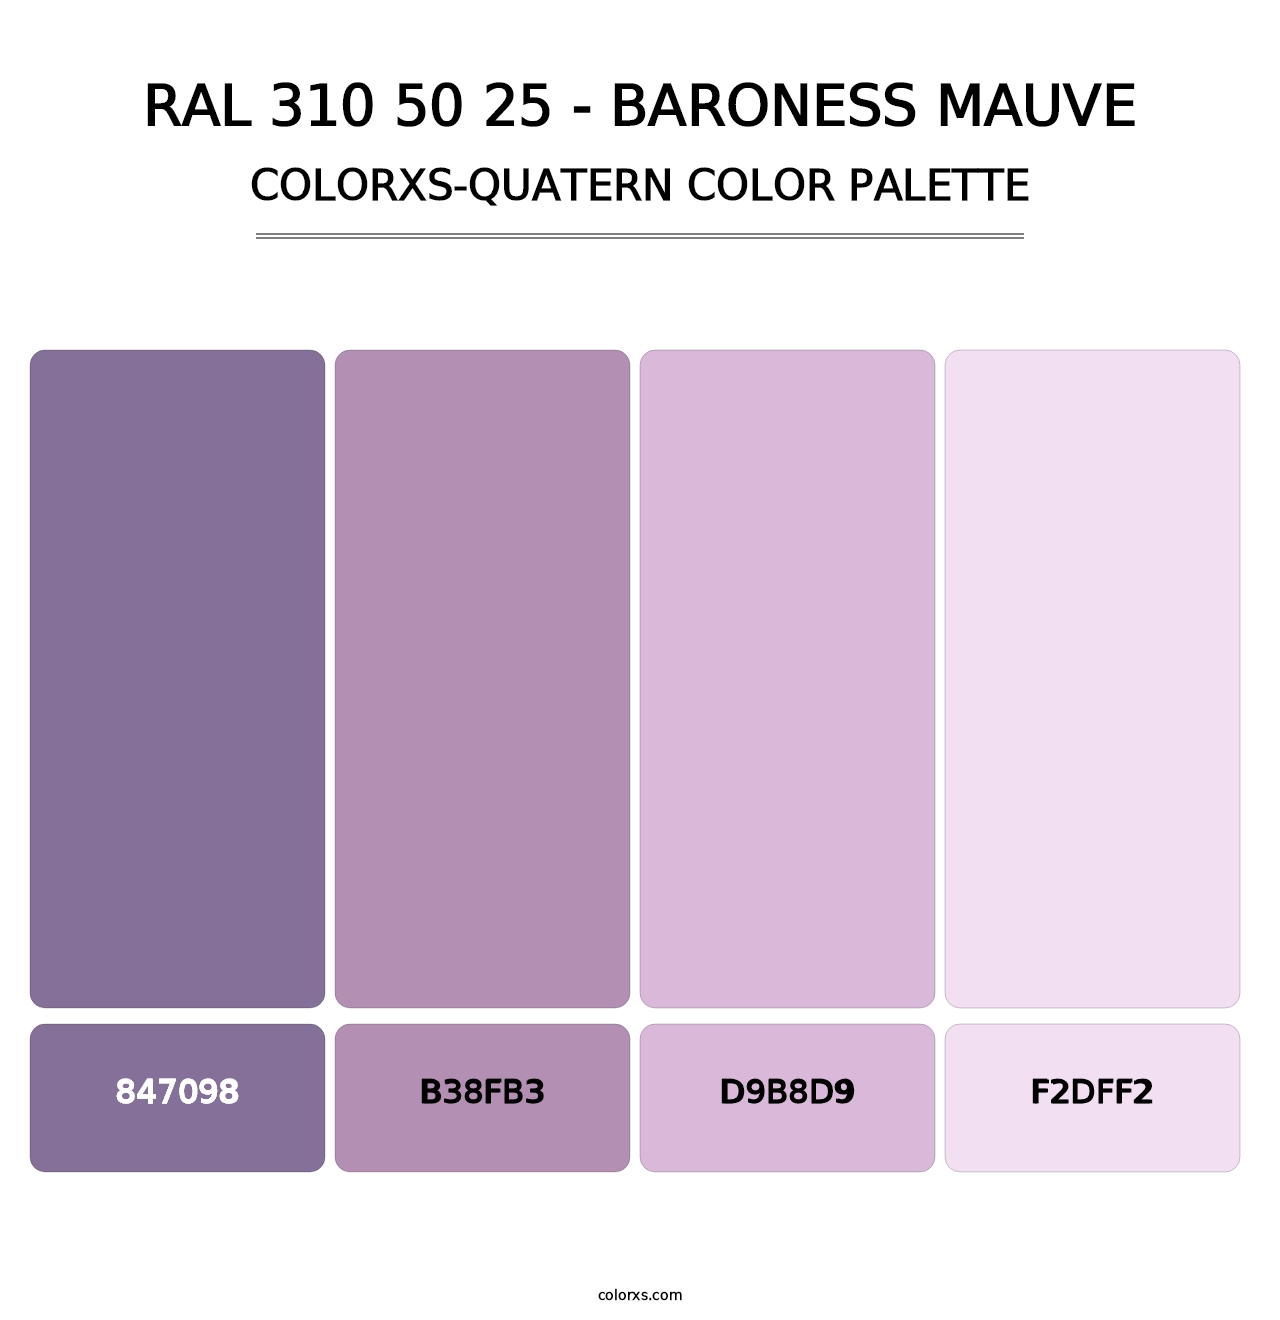 RAL 310 50 25 - Baroness Mauve - Colorxs Quatern Palette